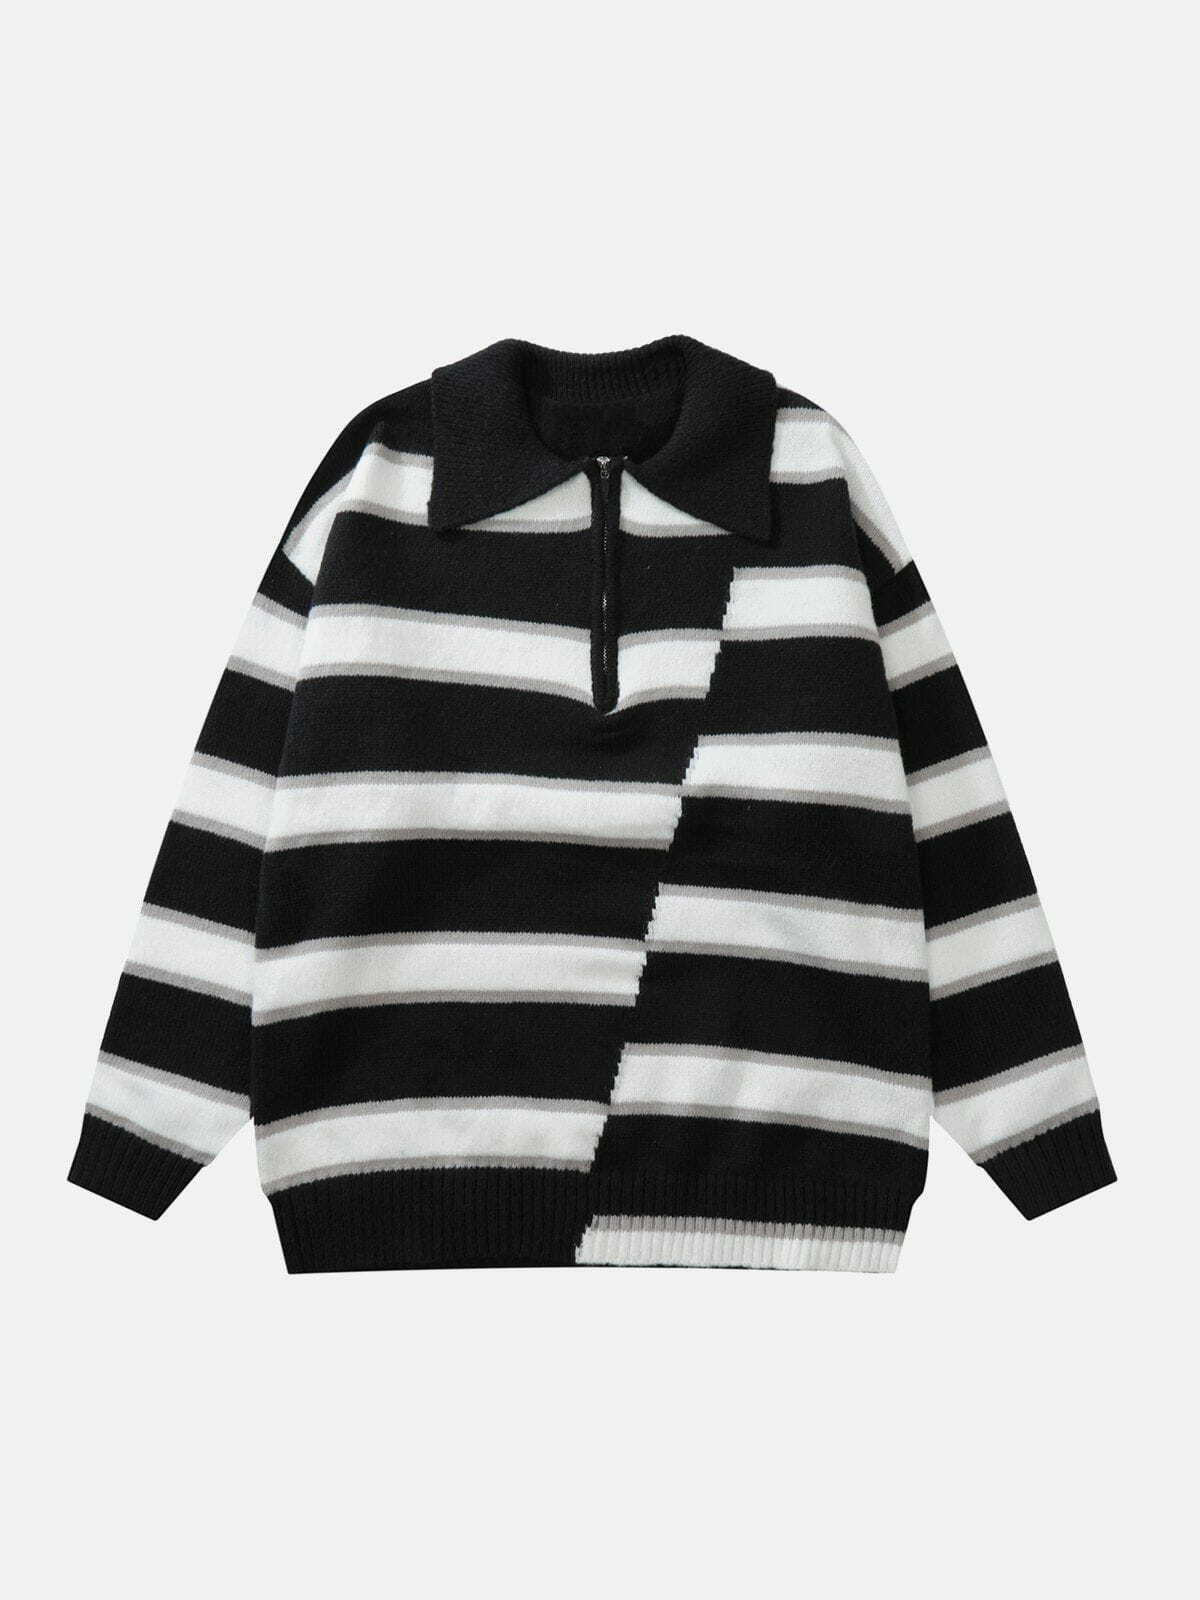 striped polo sweater edgy & retro streetwear 8296